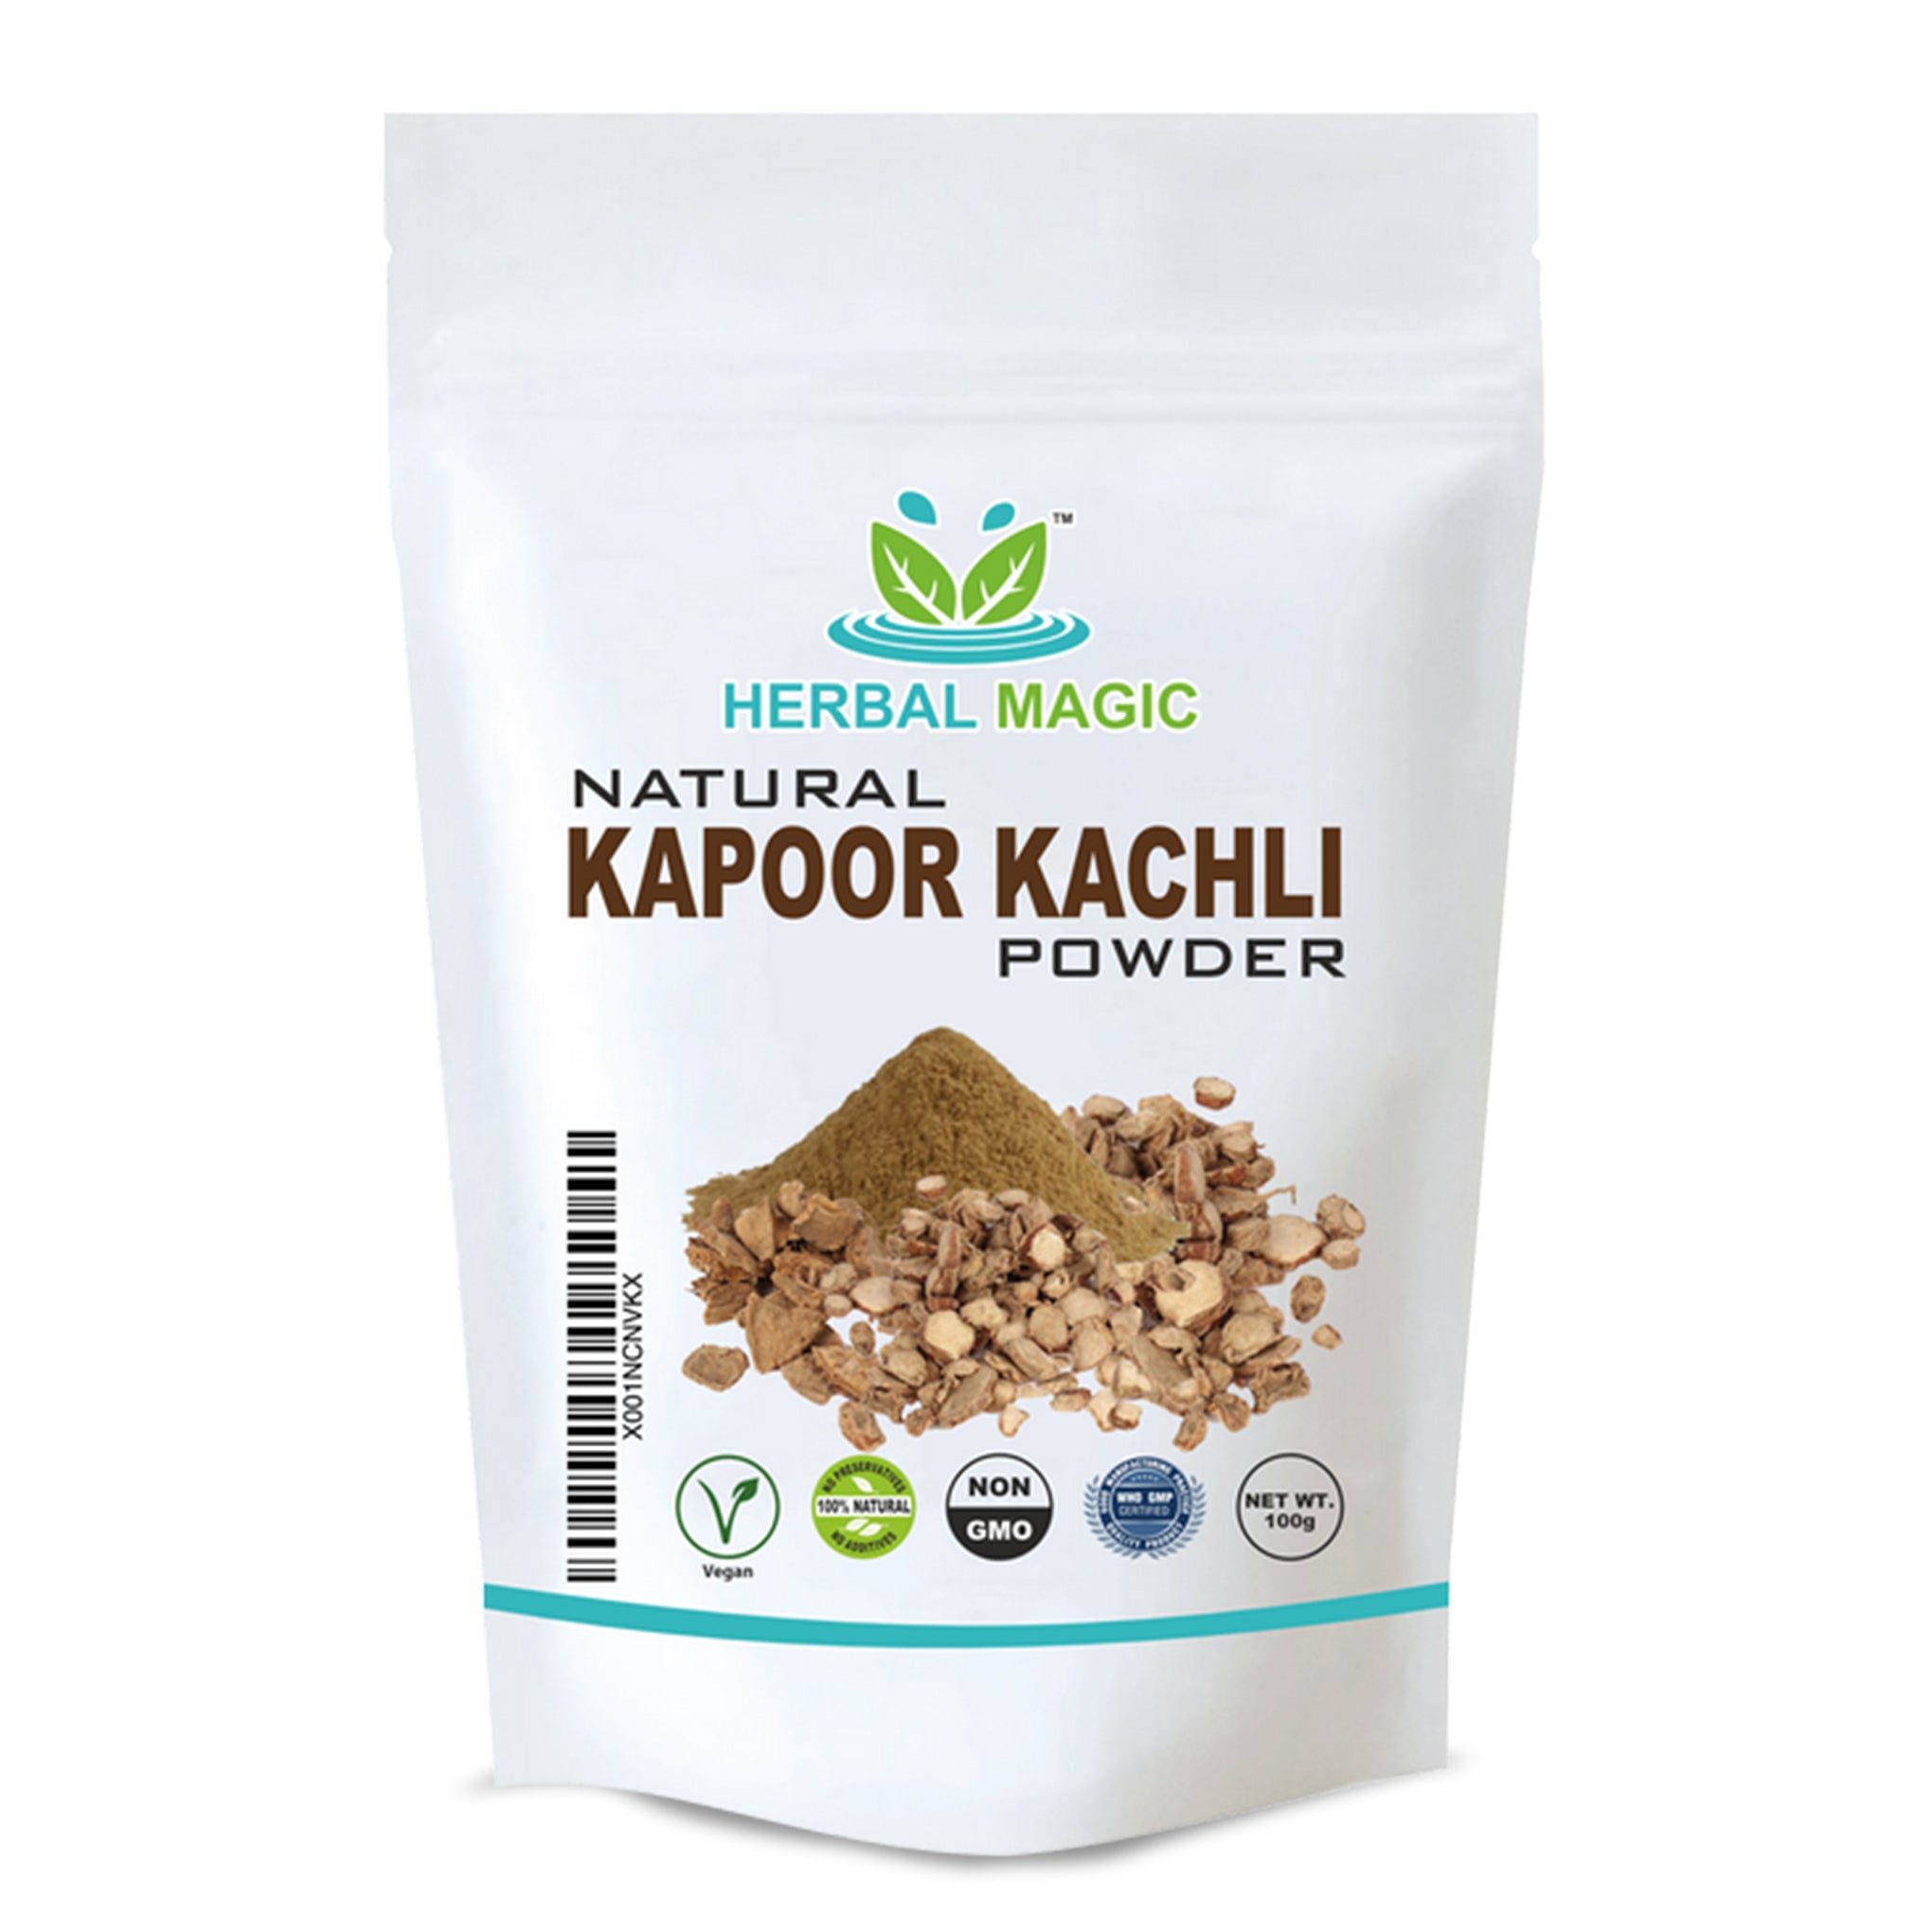 Natural Kapoor Kachli powder